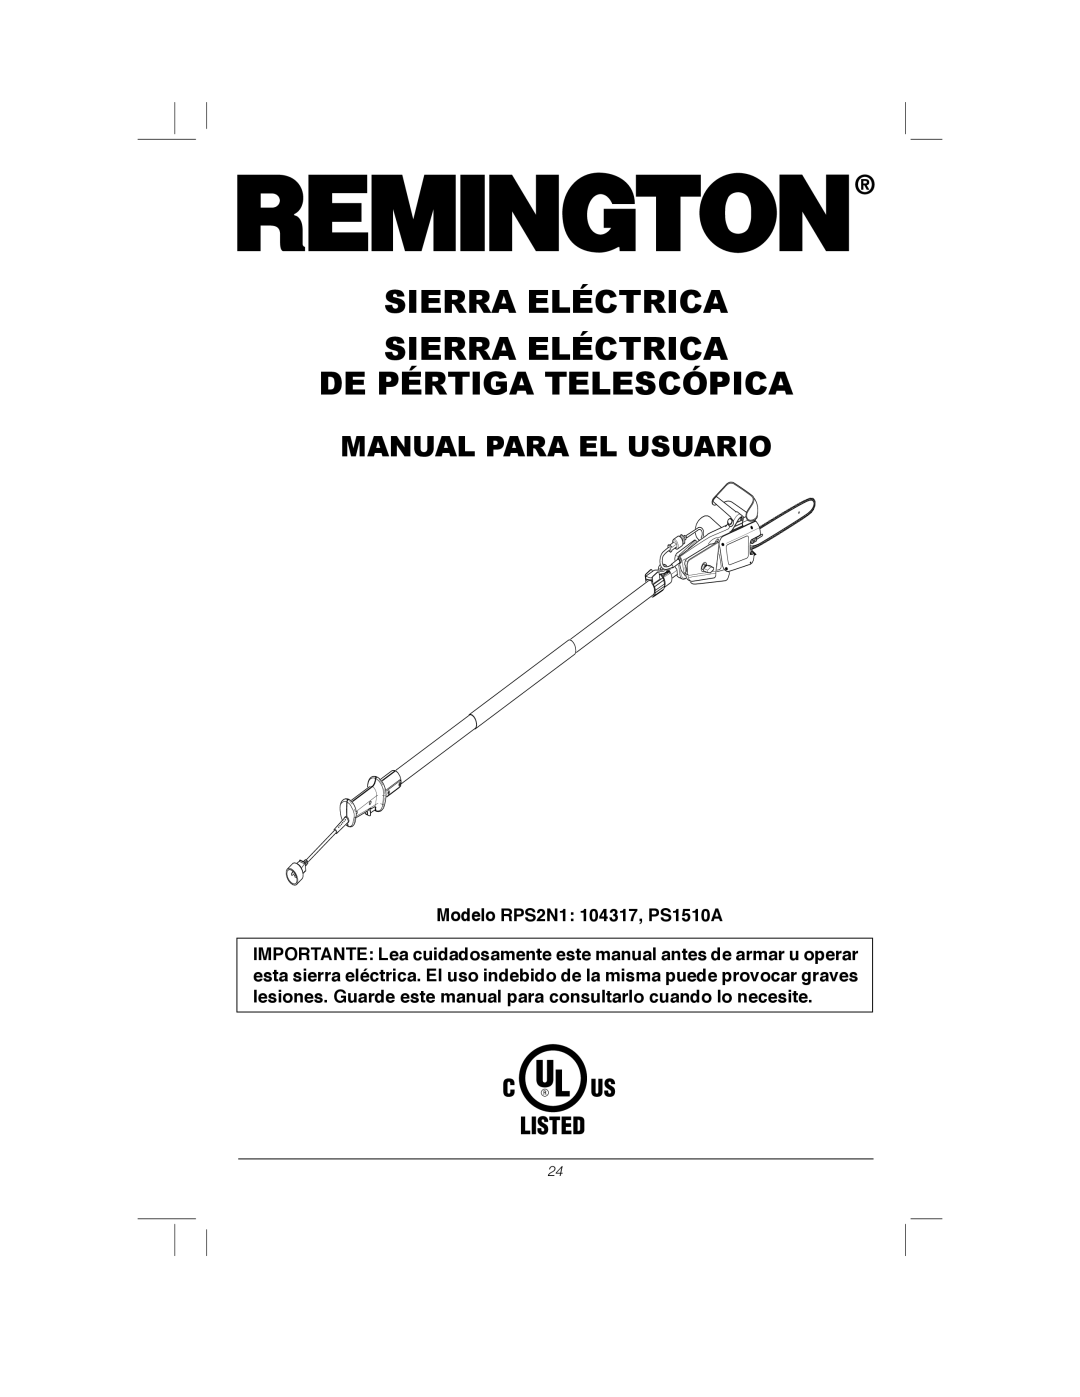 Remington Power Tools RPS2N1, 104317, PS1510A manual Sierra Eléctrica Sierra Eléctrica De Pértiga Telescópica 